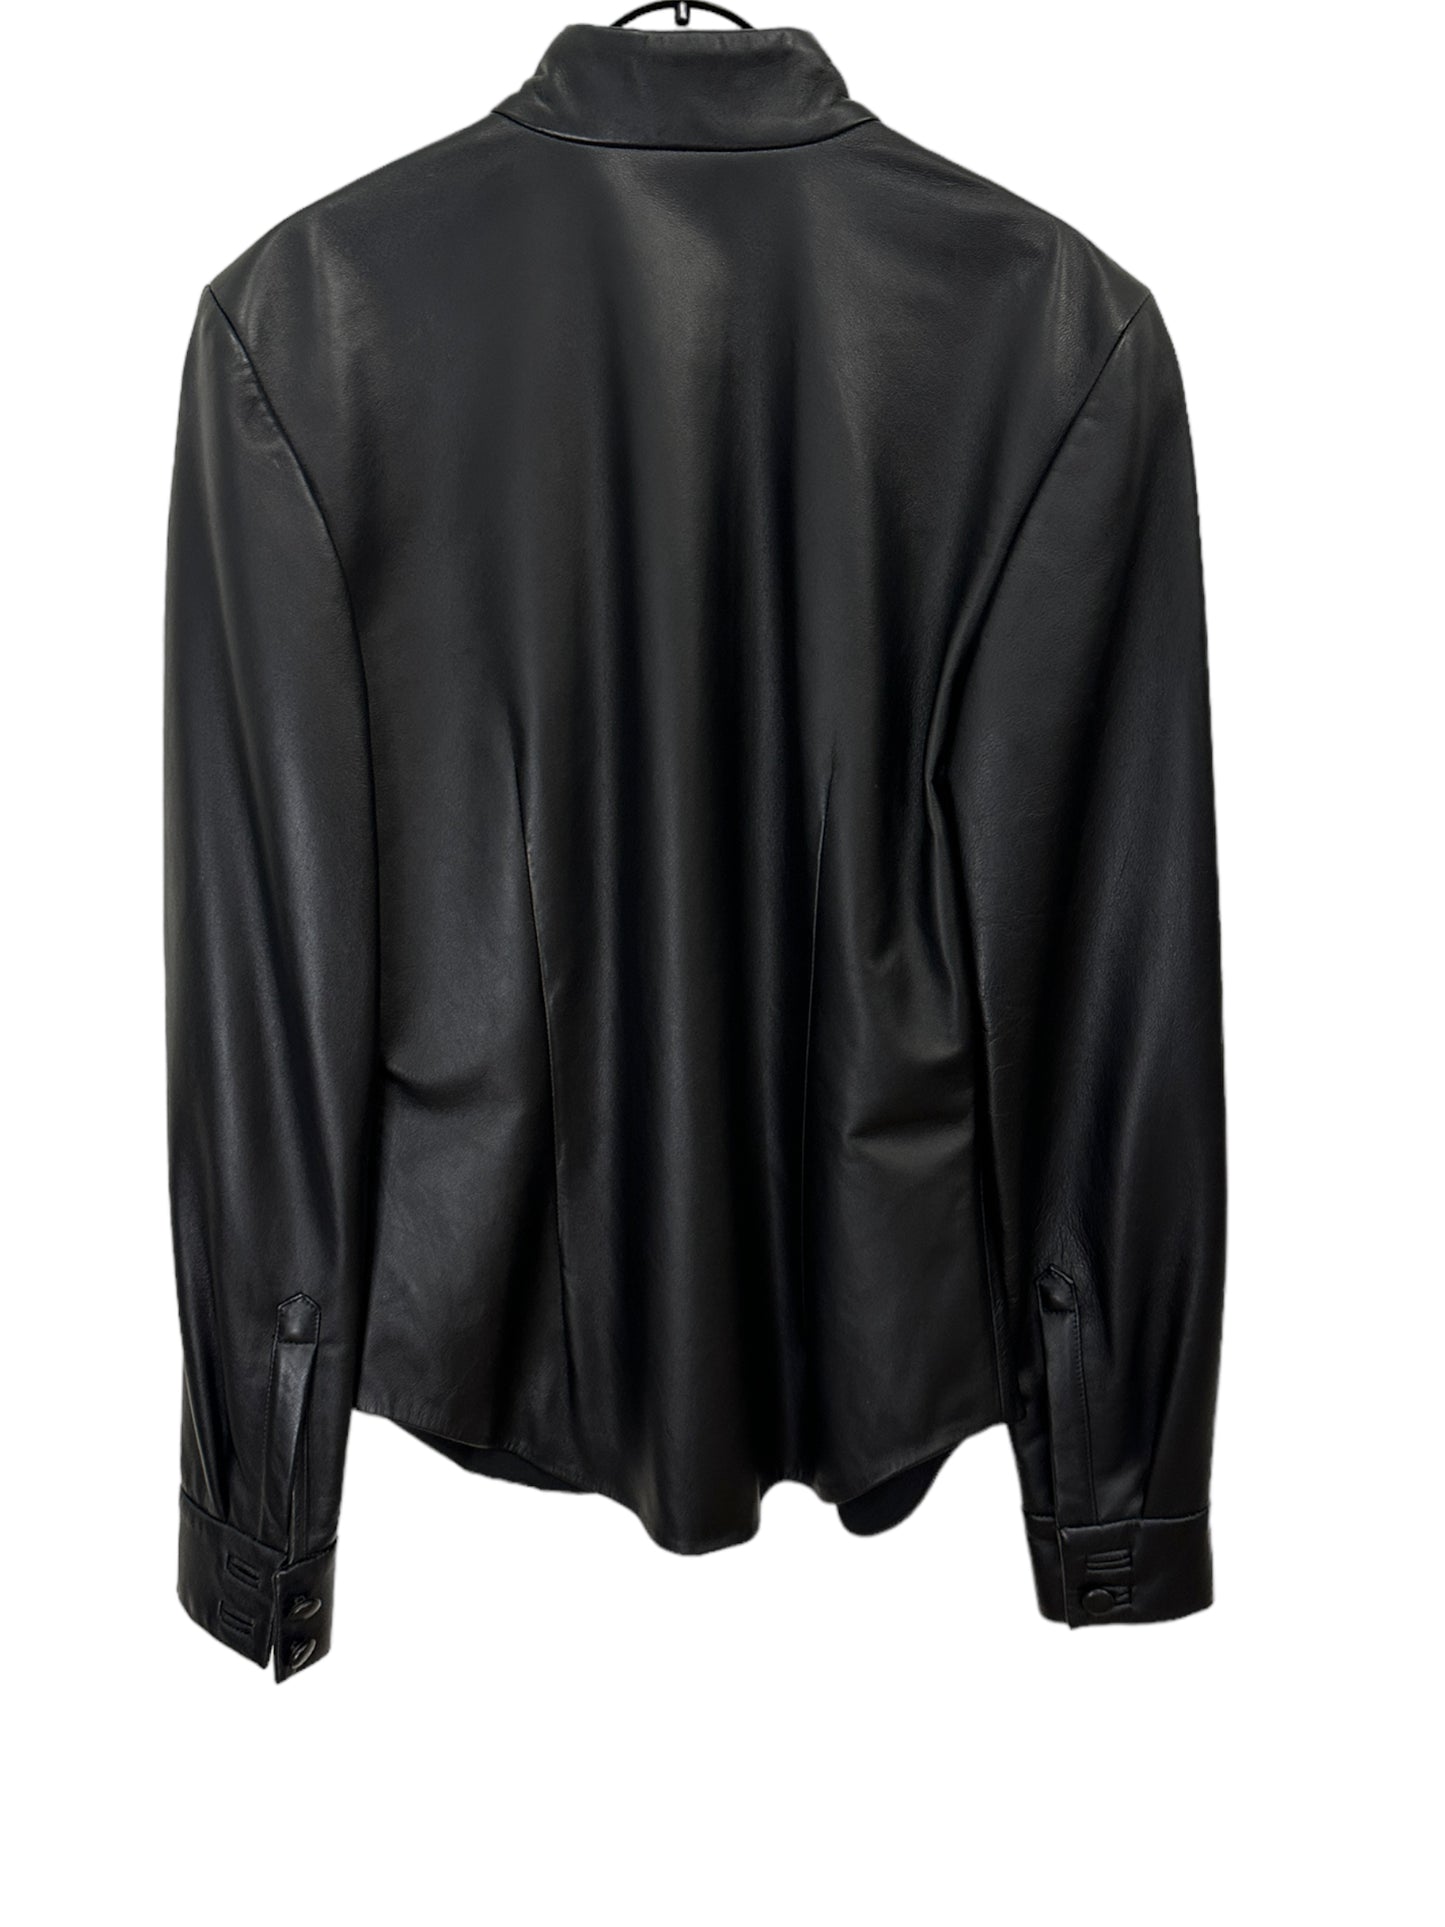 PRITCH London - Leather Shirt Black - Size XS